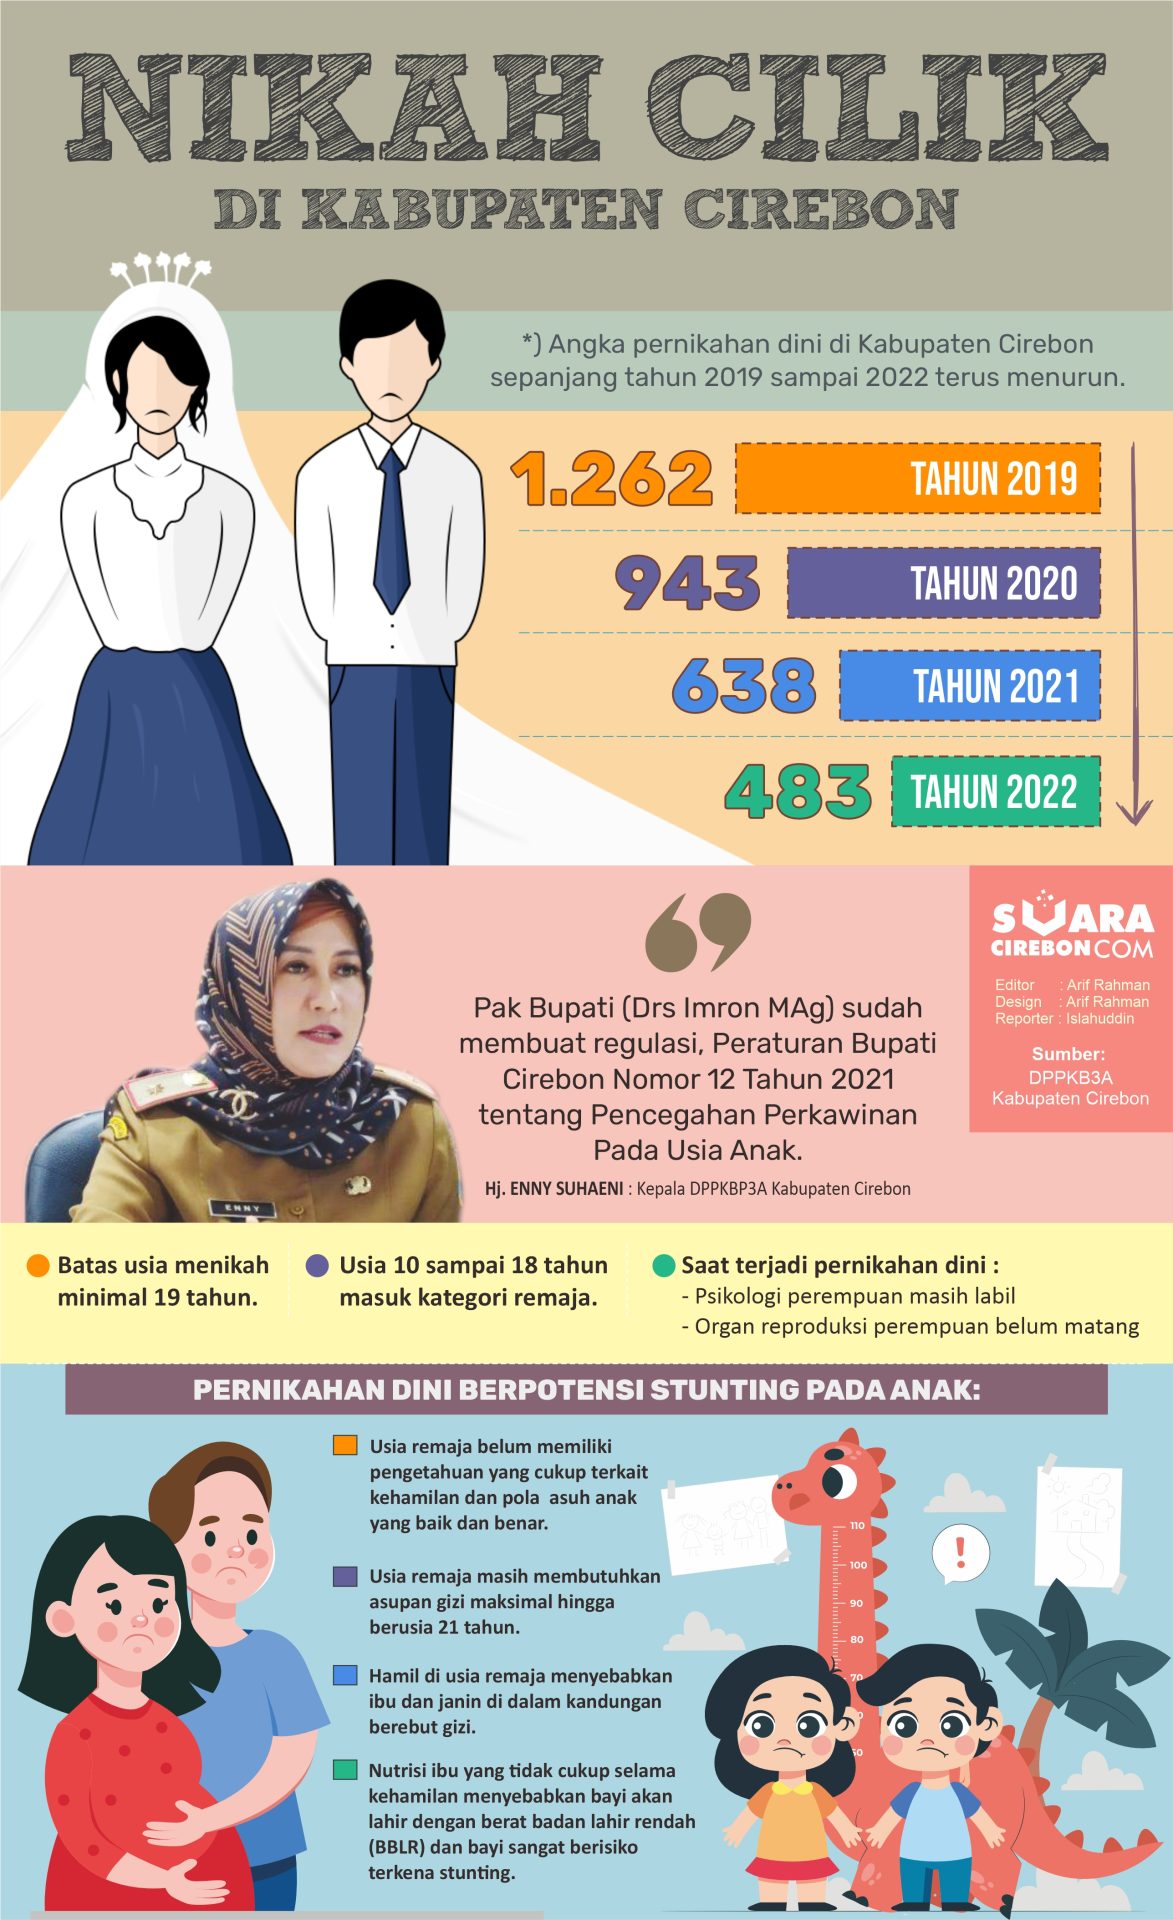 Foto: Sc Infografis Nikah Cilik - Suara Cirebon